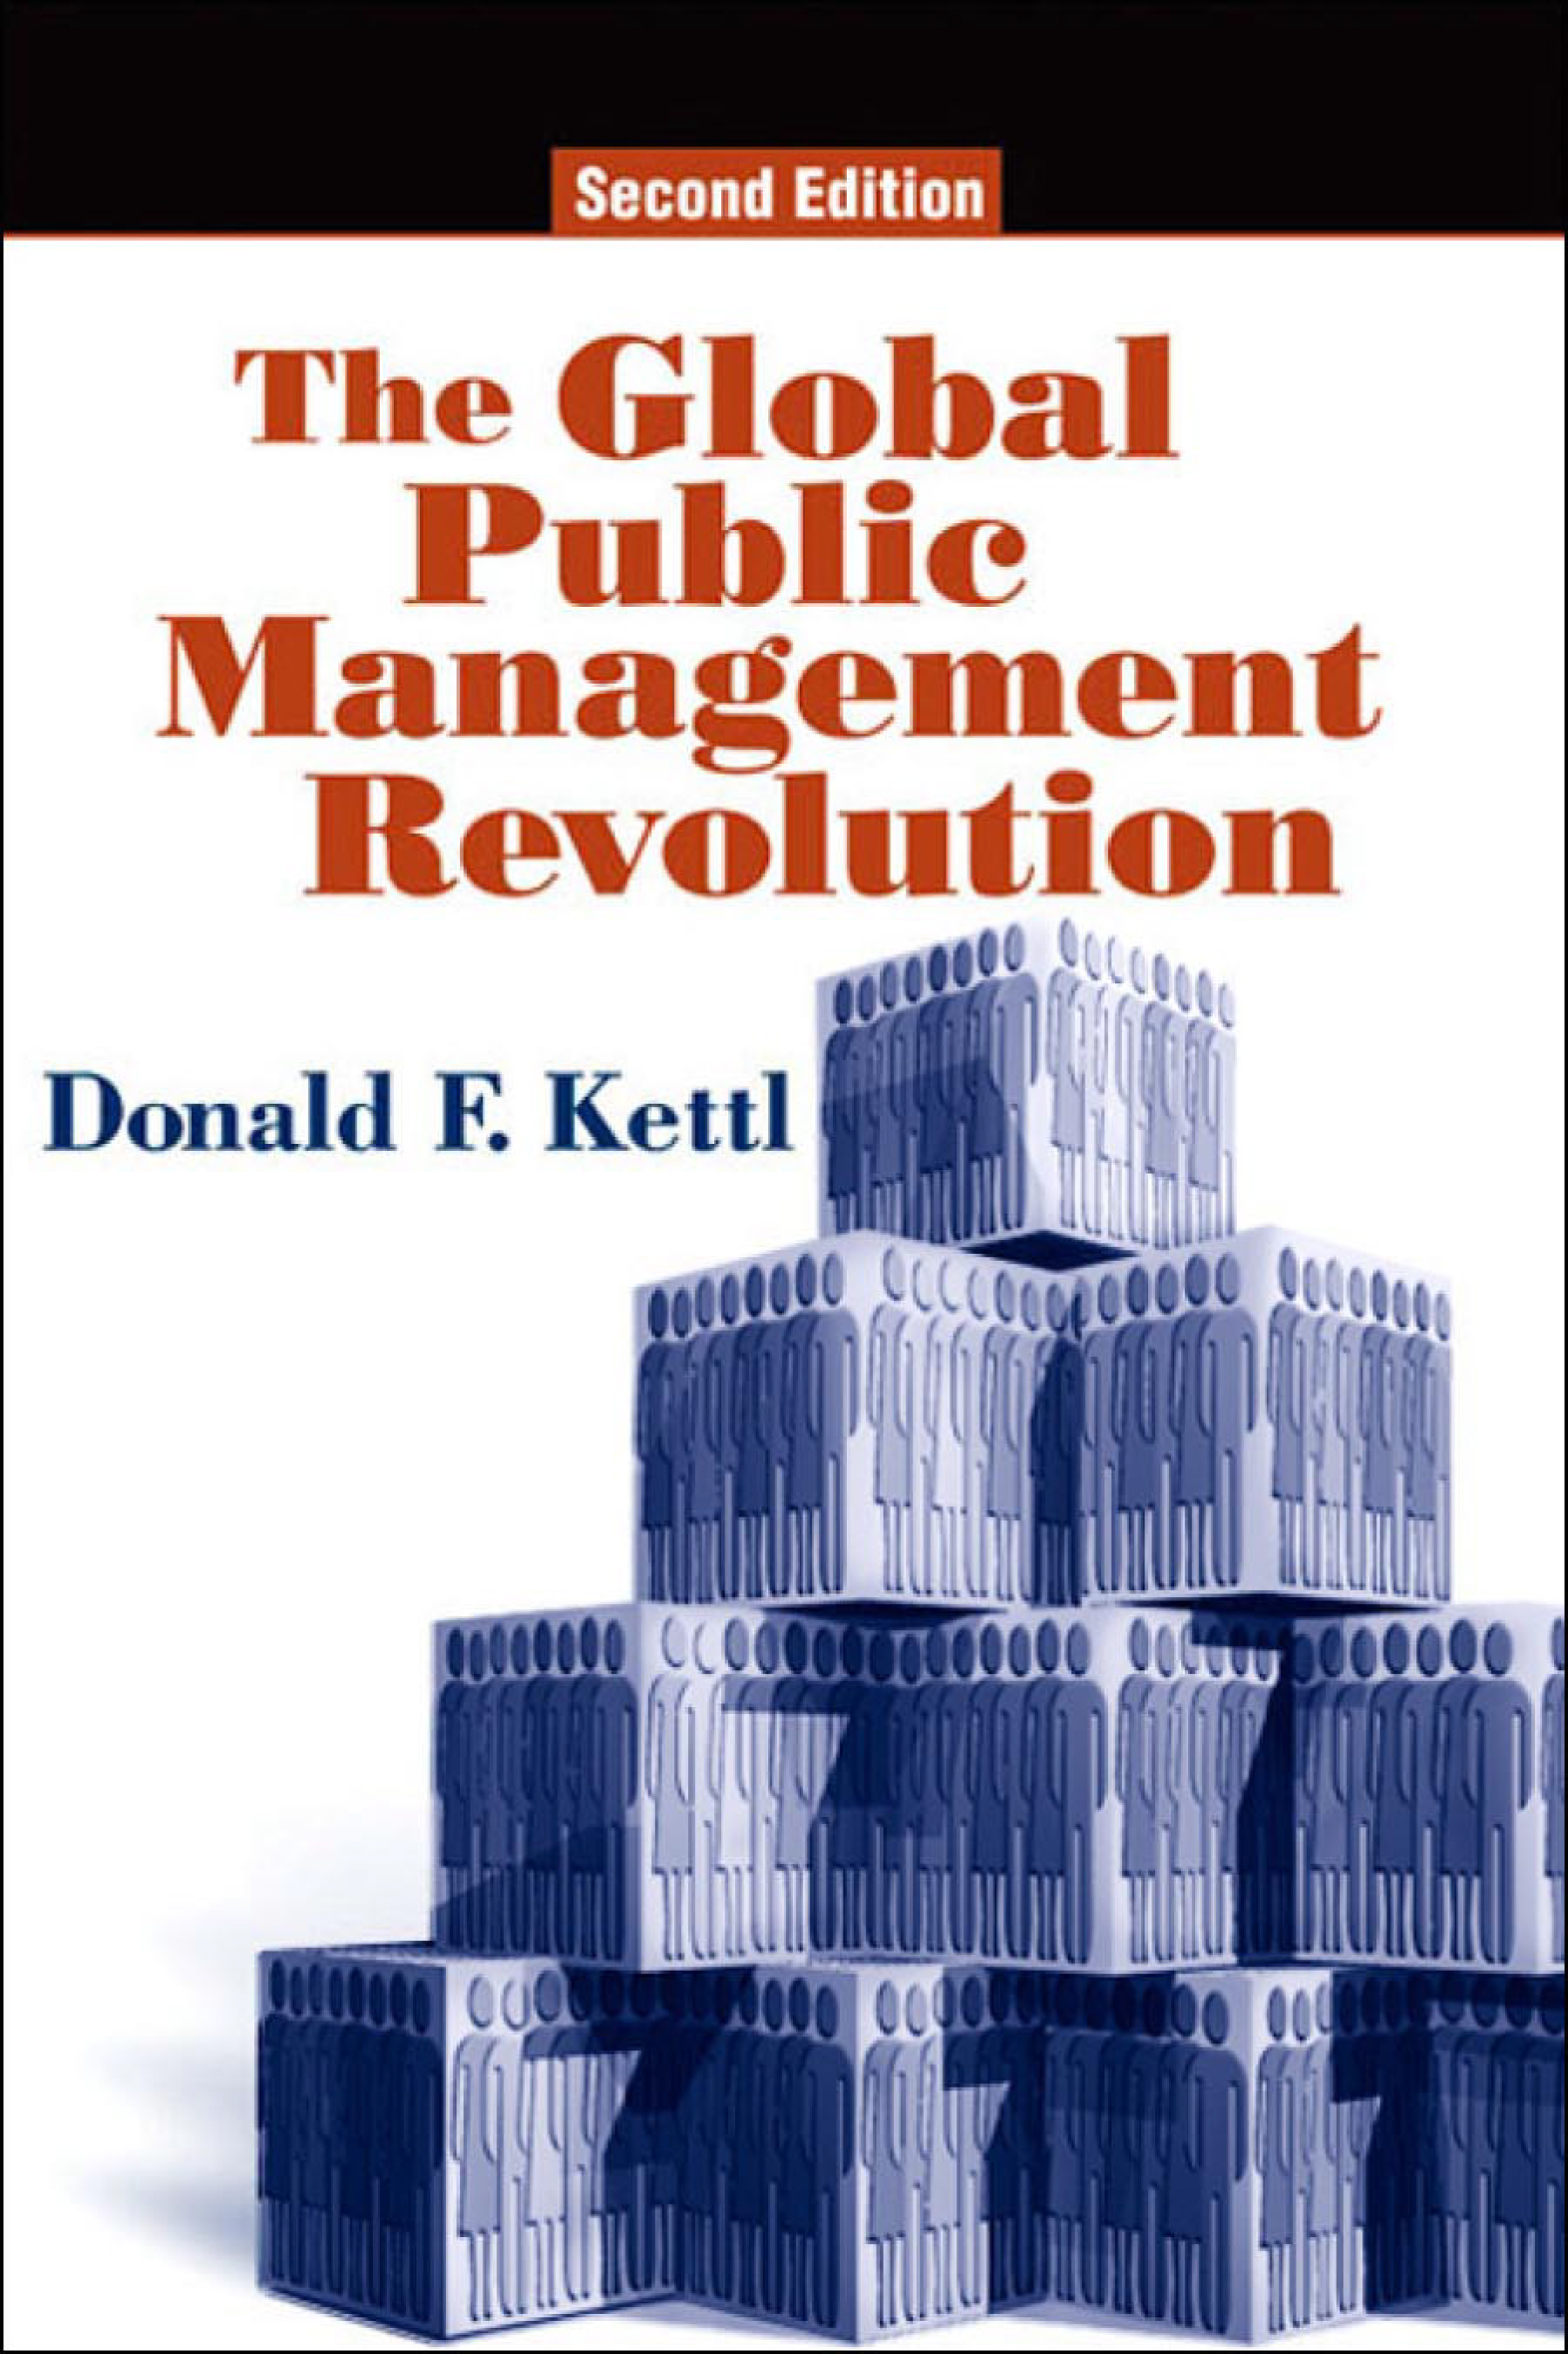 The Global Public Management Revolution